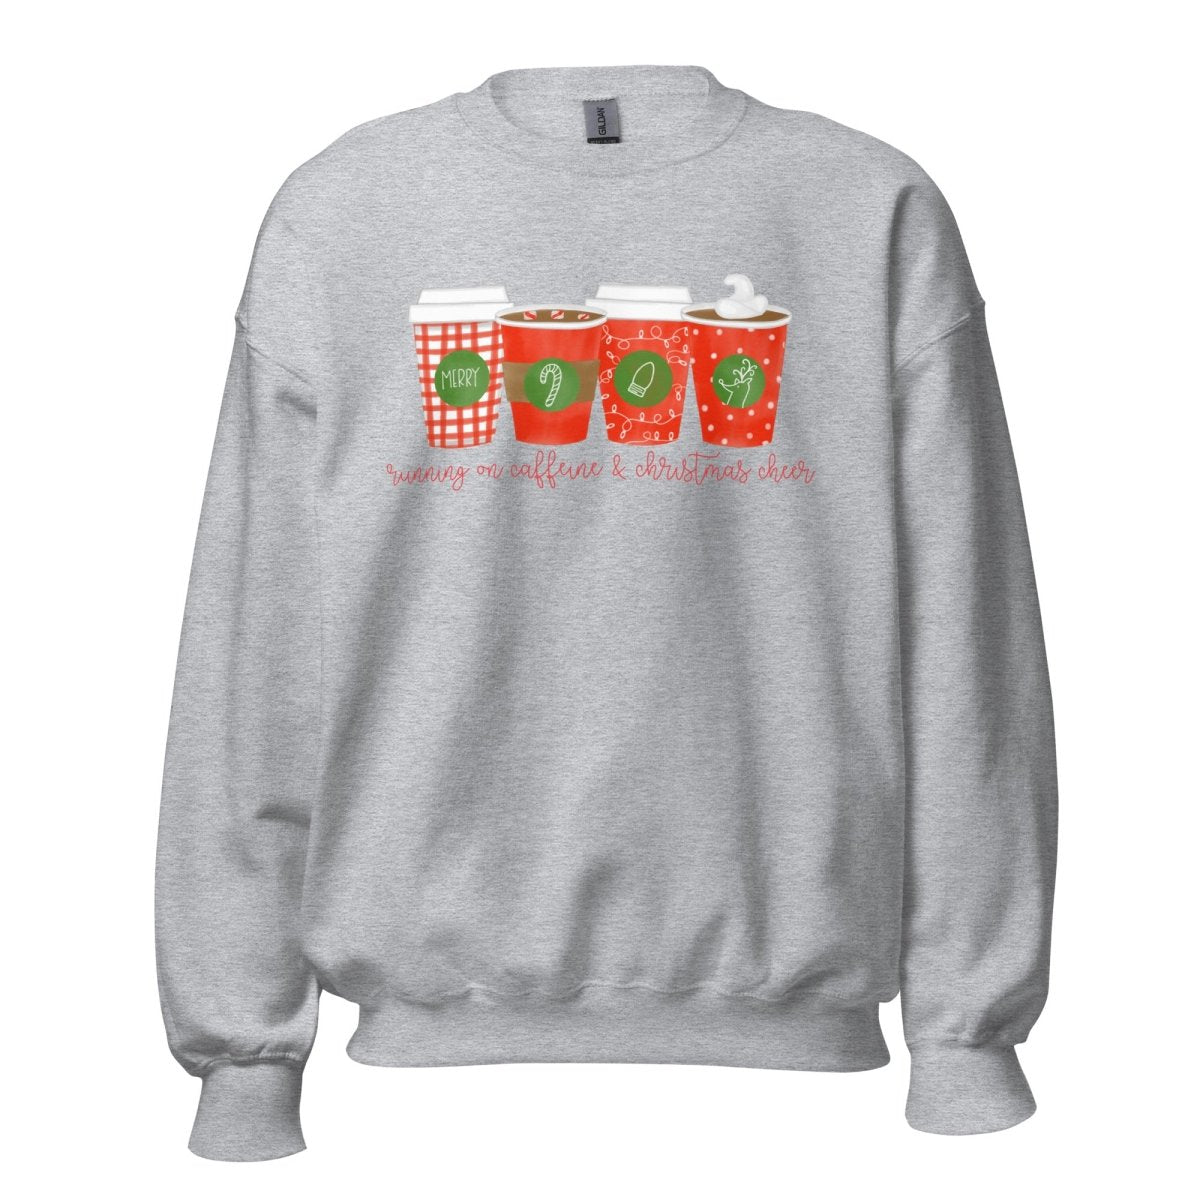 Monogrammed 'Running On Caffeine & Christmas Cheer' Crewneck Sweatshirt - United Monograms